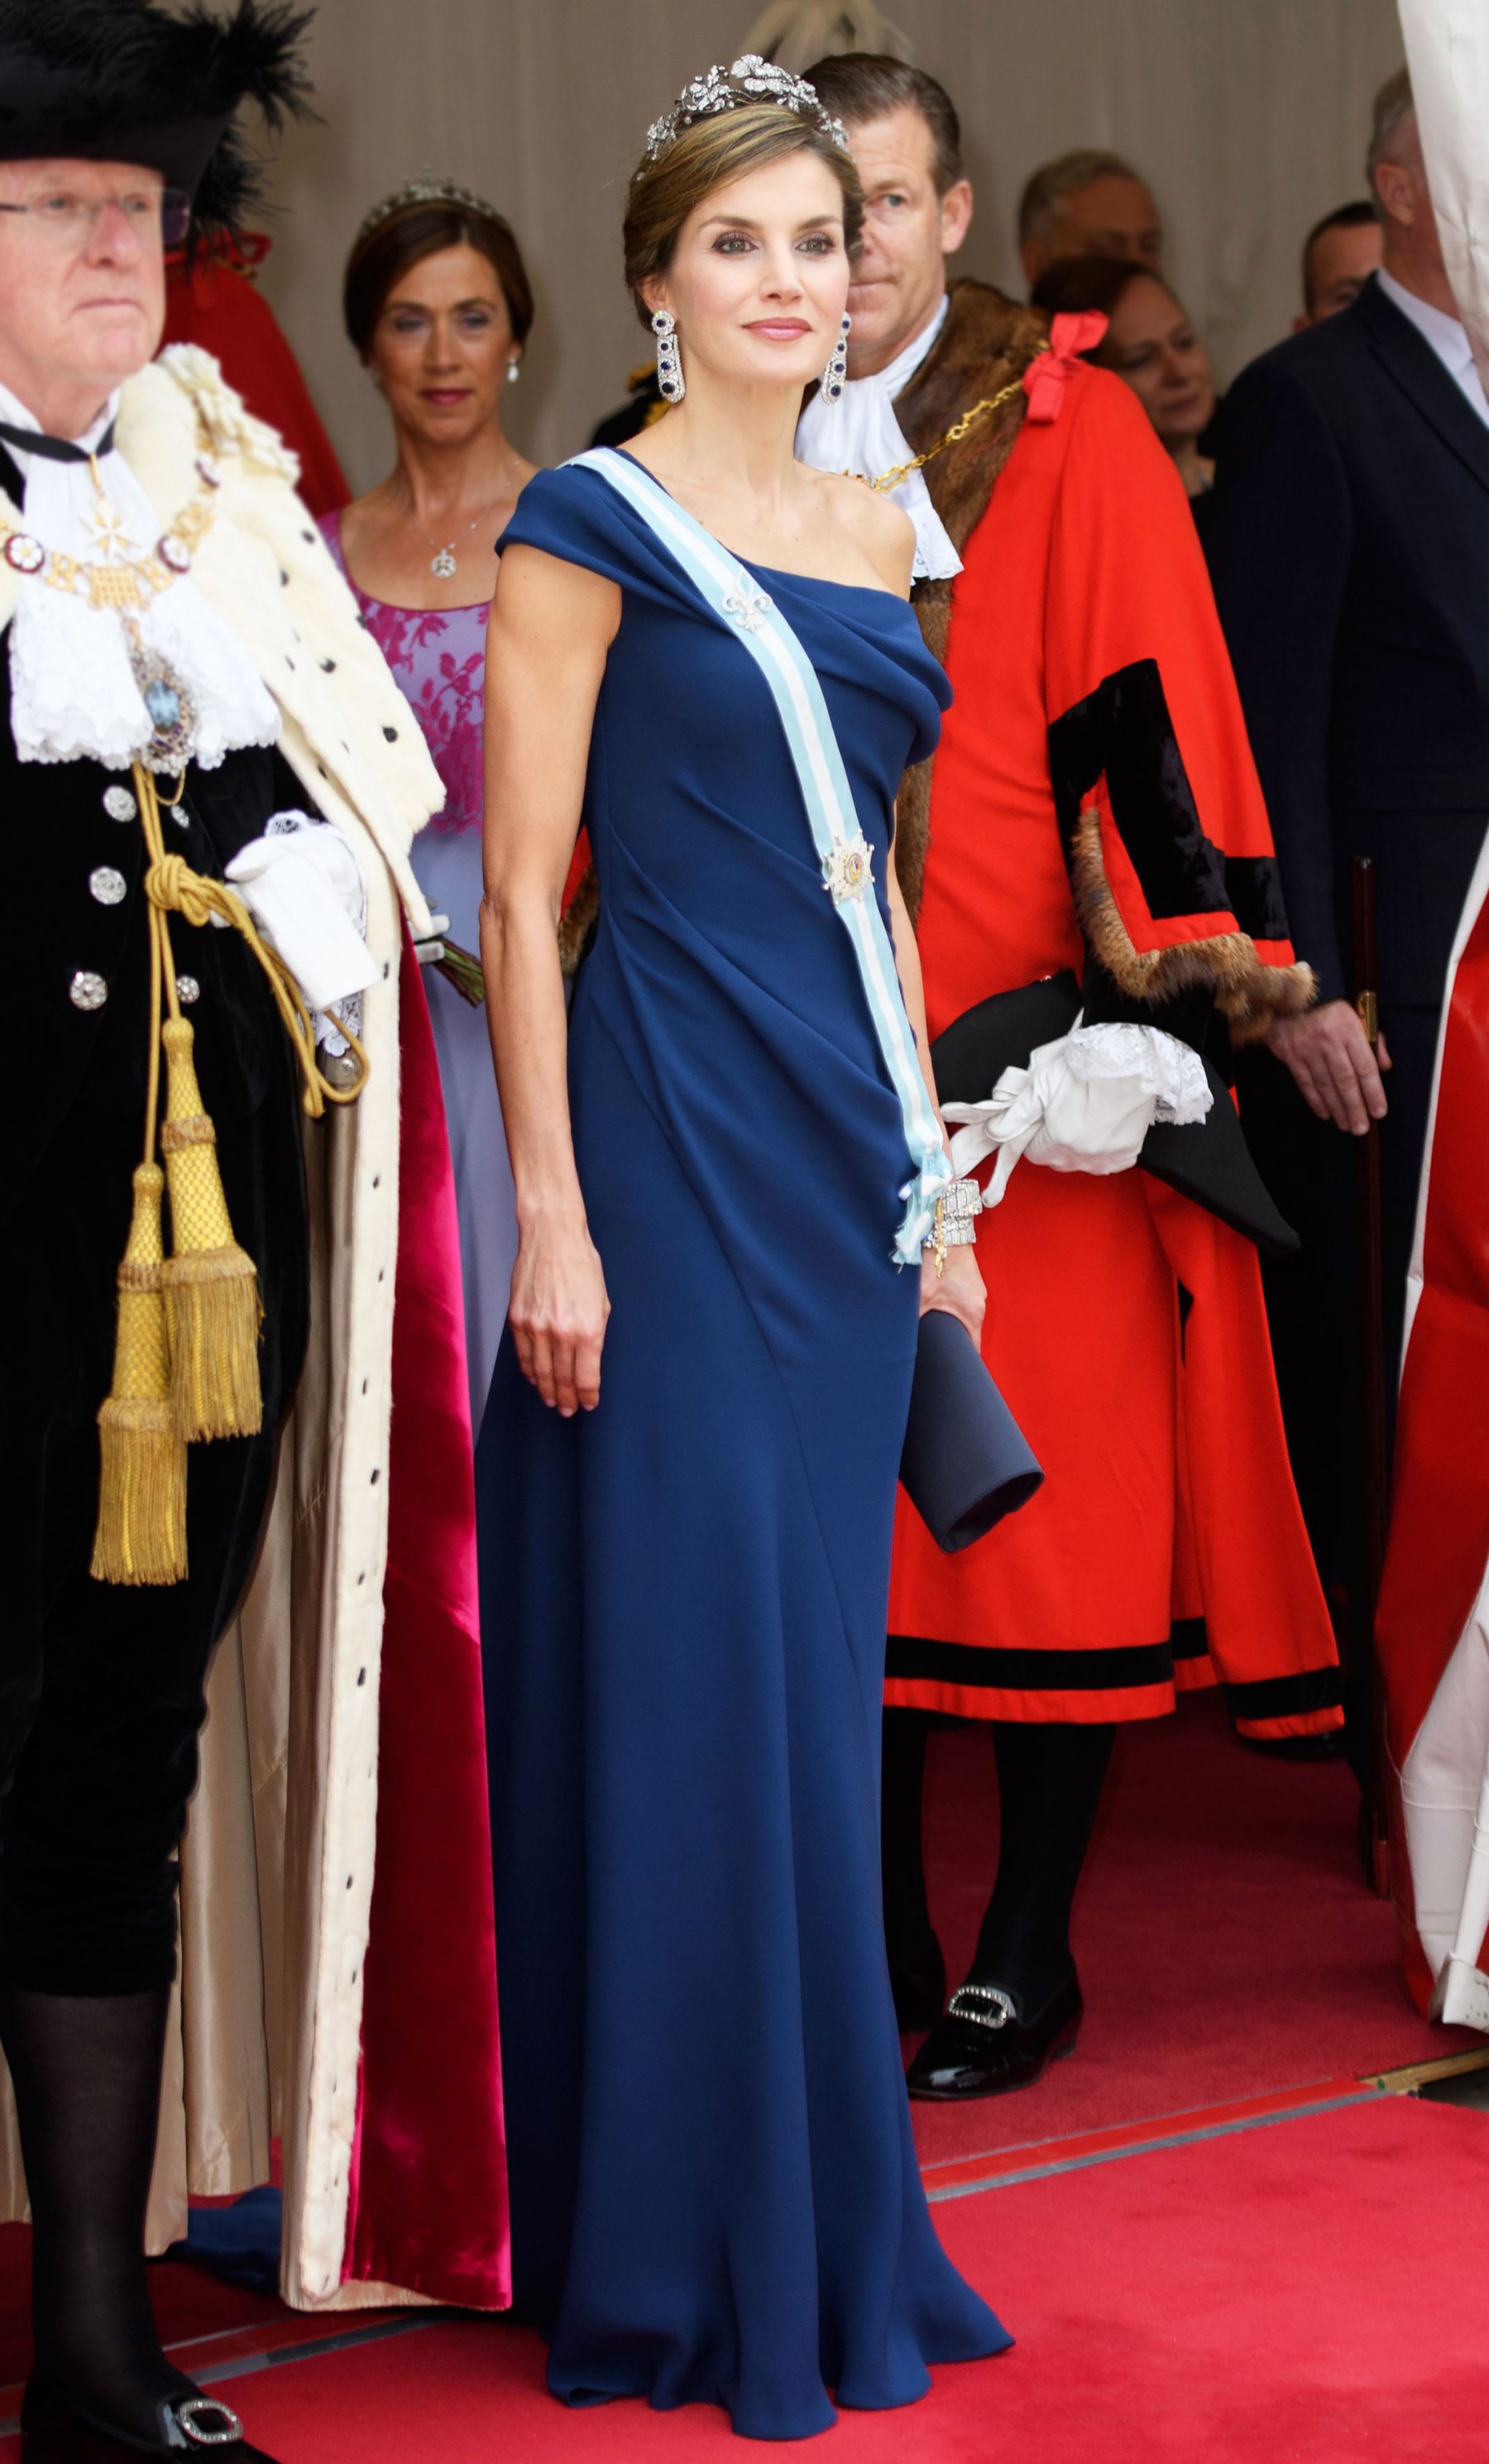 Queen Letizia of Spain's Best Formal Style, Elegant Looks: Pics